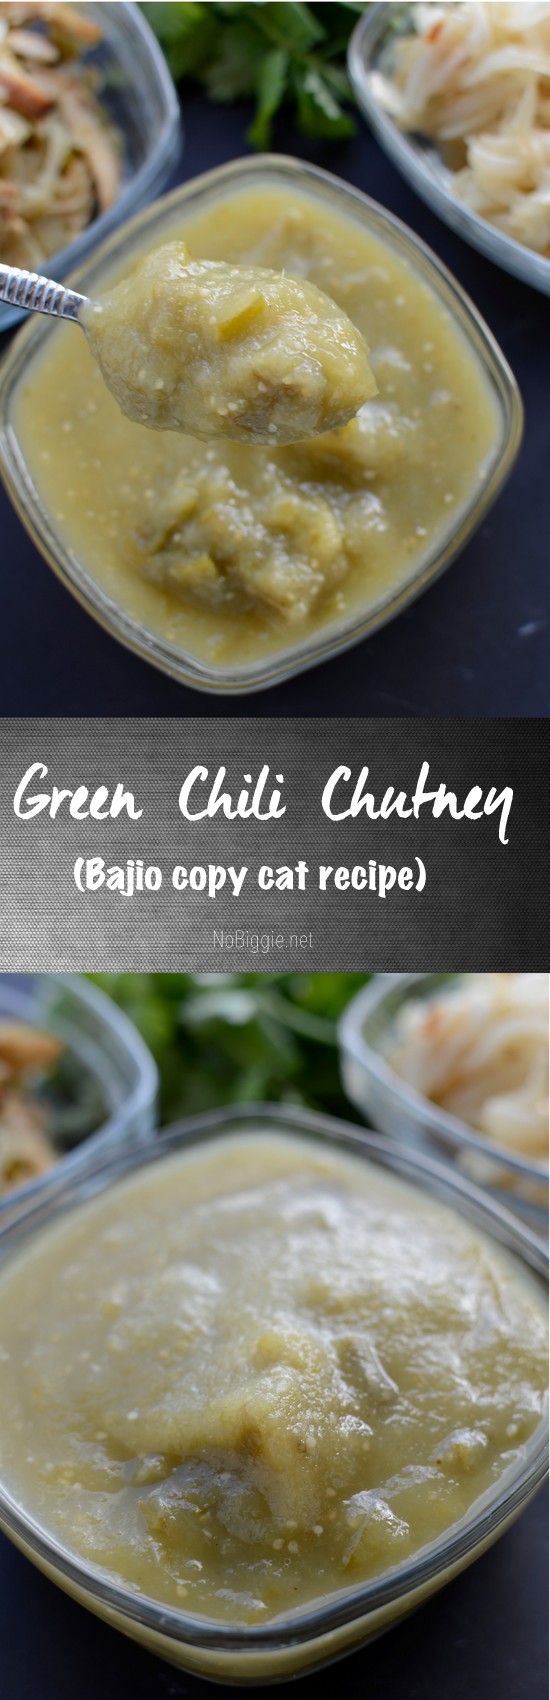 Green Chile Chutney | NoBiggie